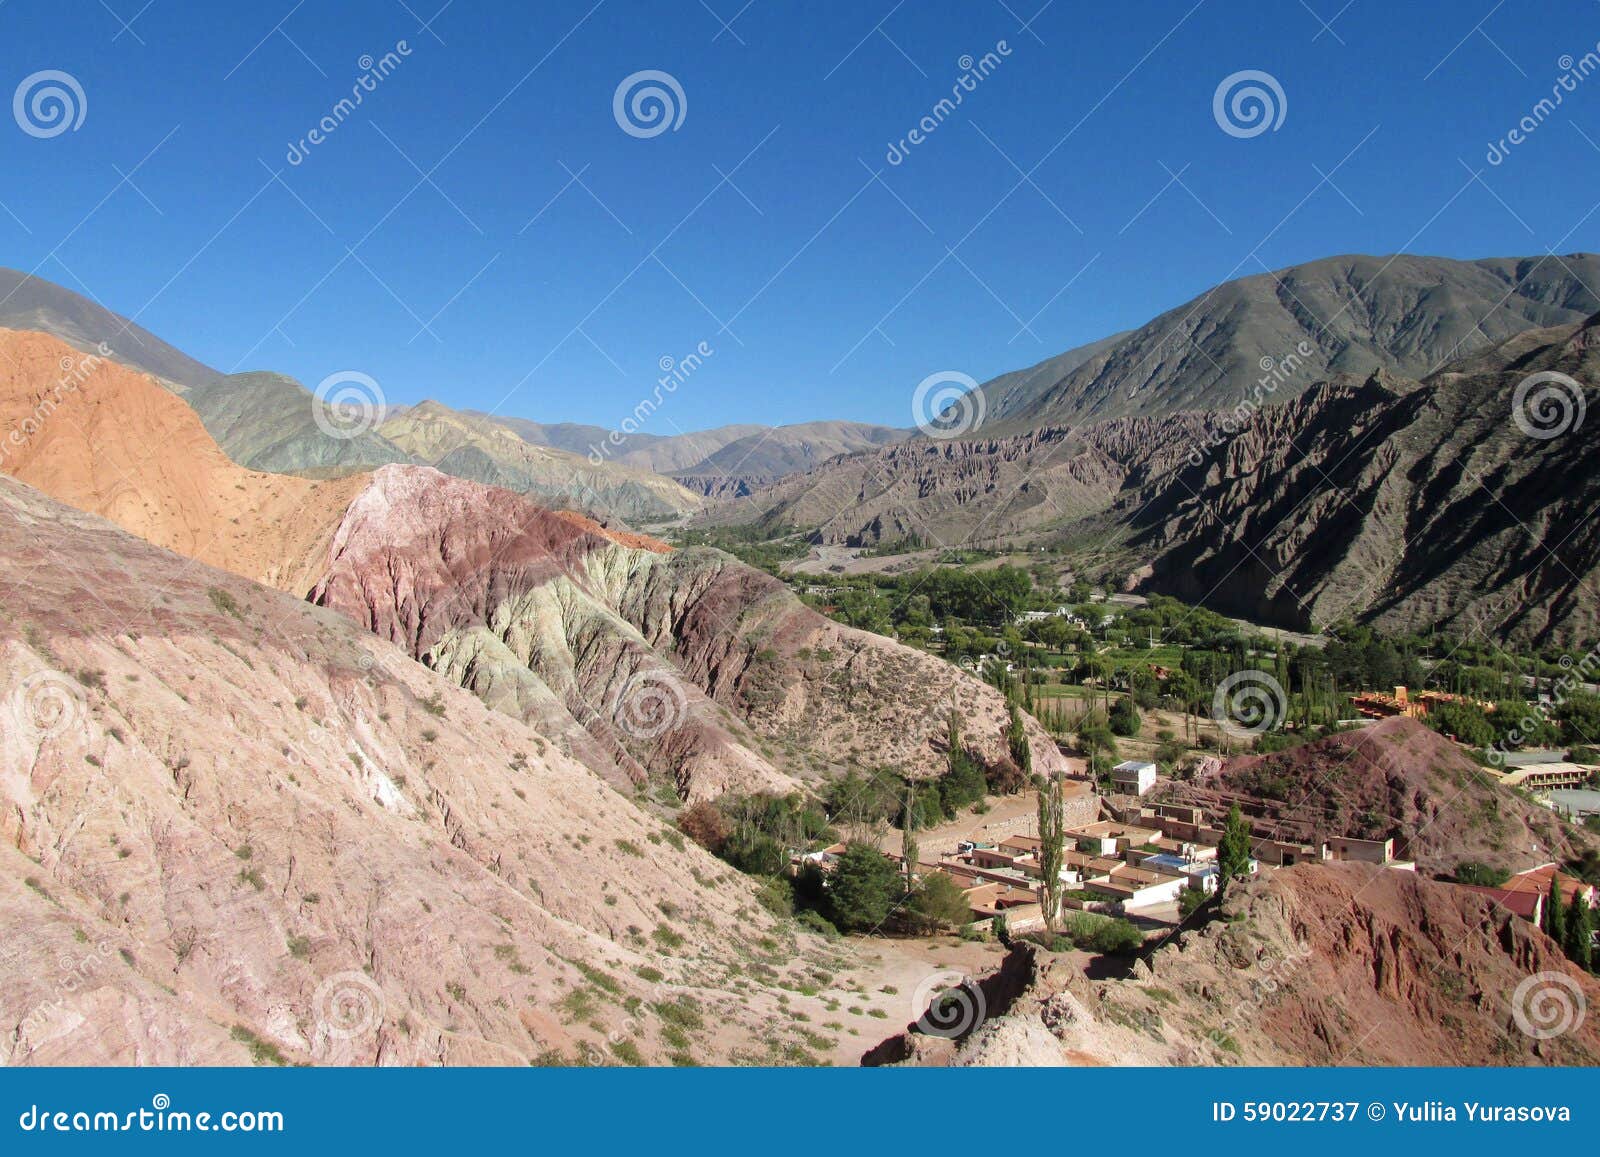 humahuaca mountains panorama view